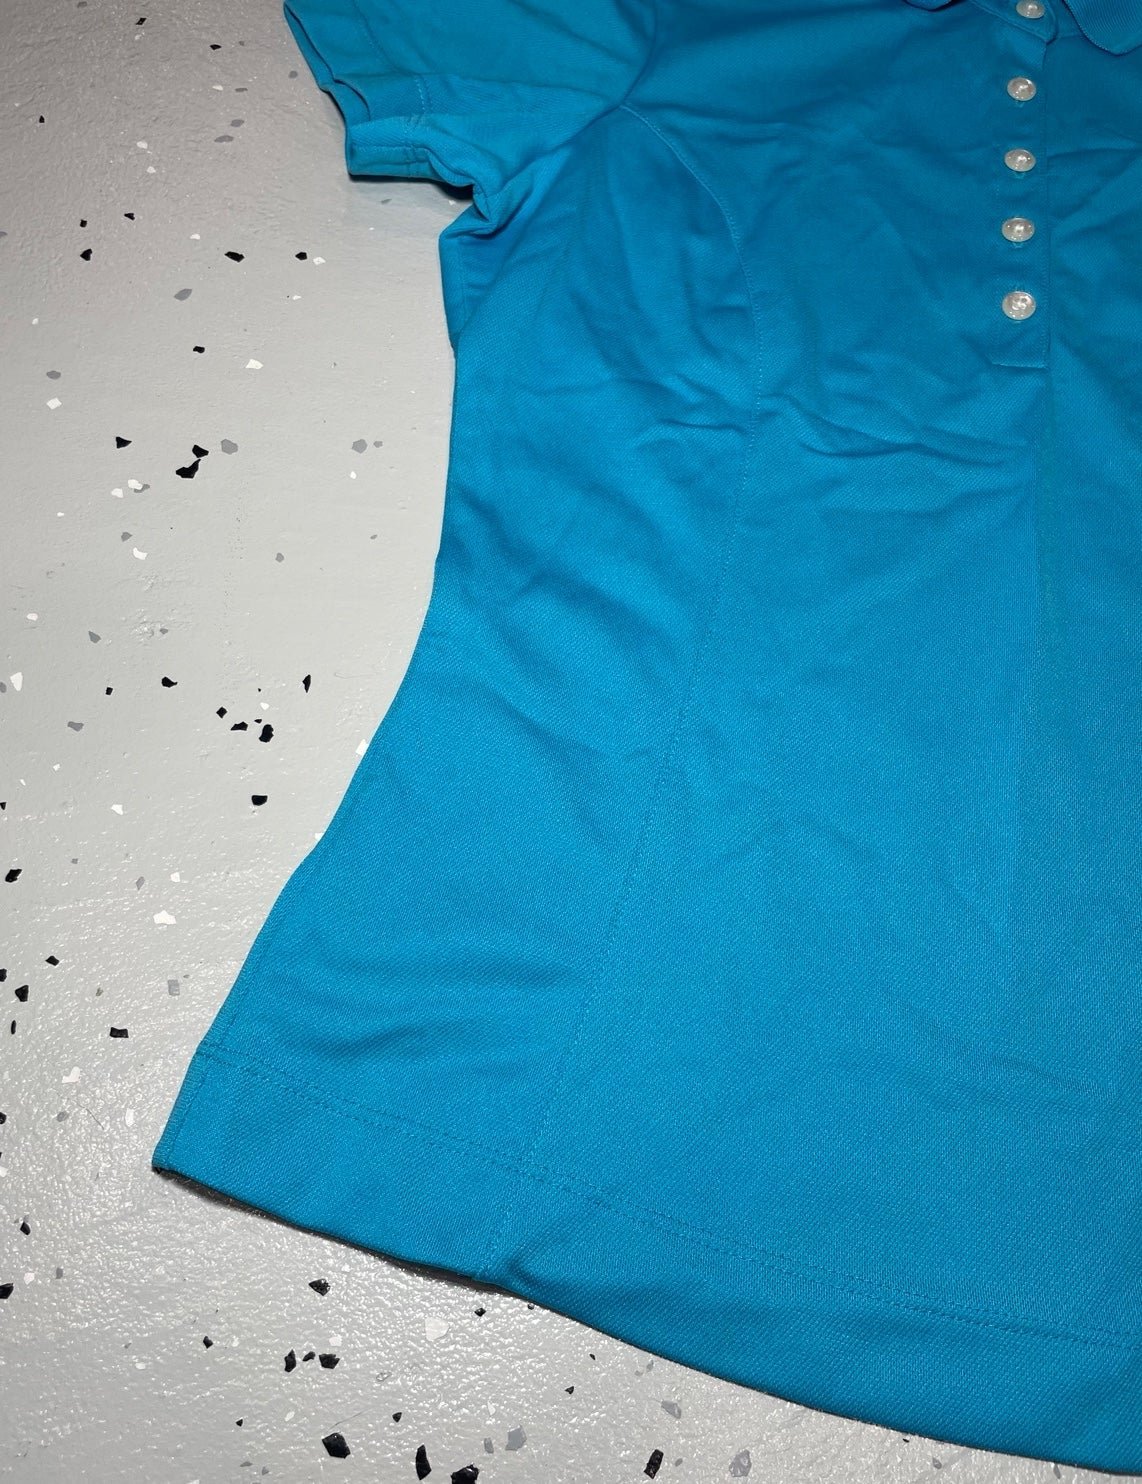 good price Nike Golf Dri-Fit Polo Shirt Womens XS Petite Aqua Blue OT9i3pJqr just for you